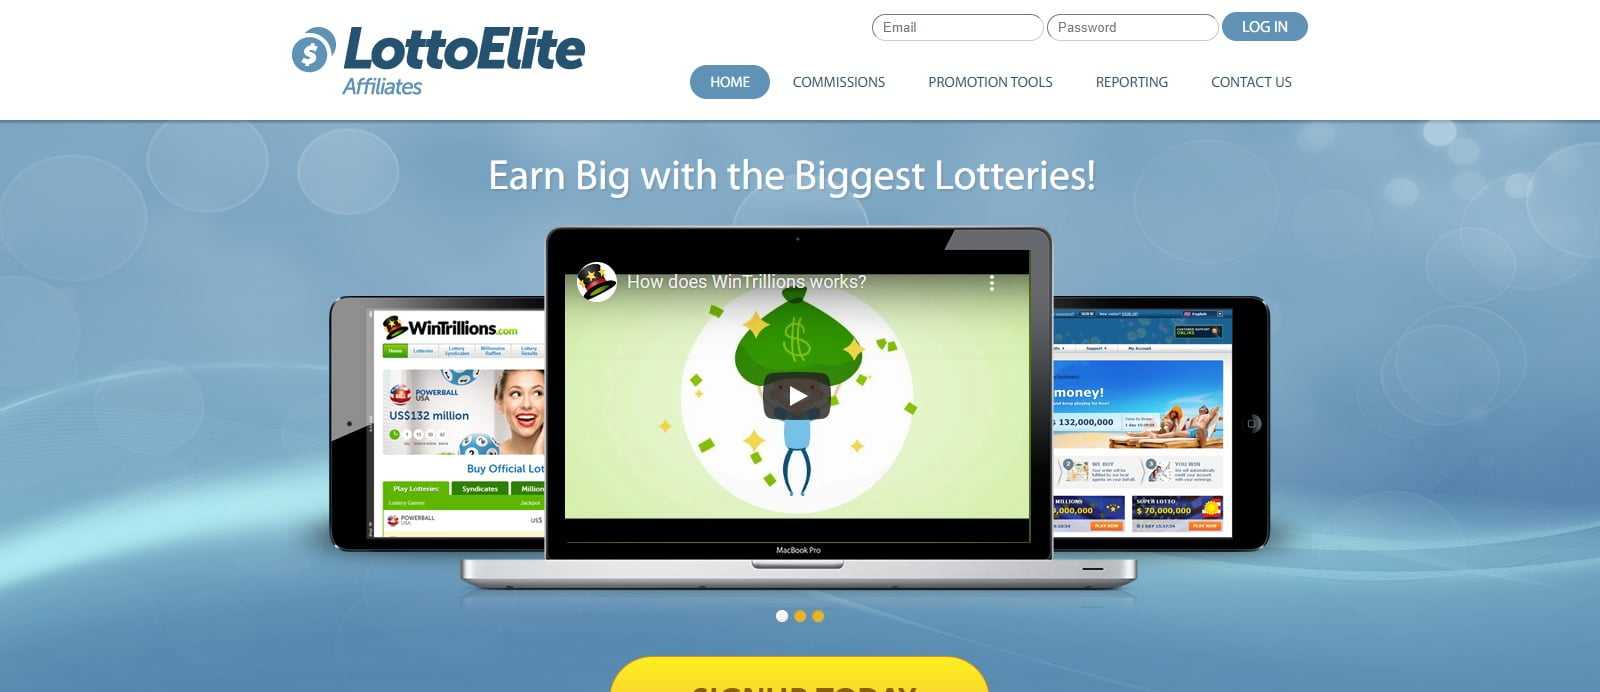 LottoElite Affiliates Program Review: 10%-15% Revenue Share, $10-$45 cpa